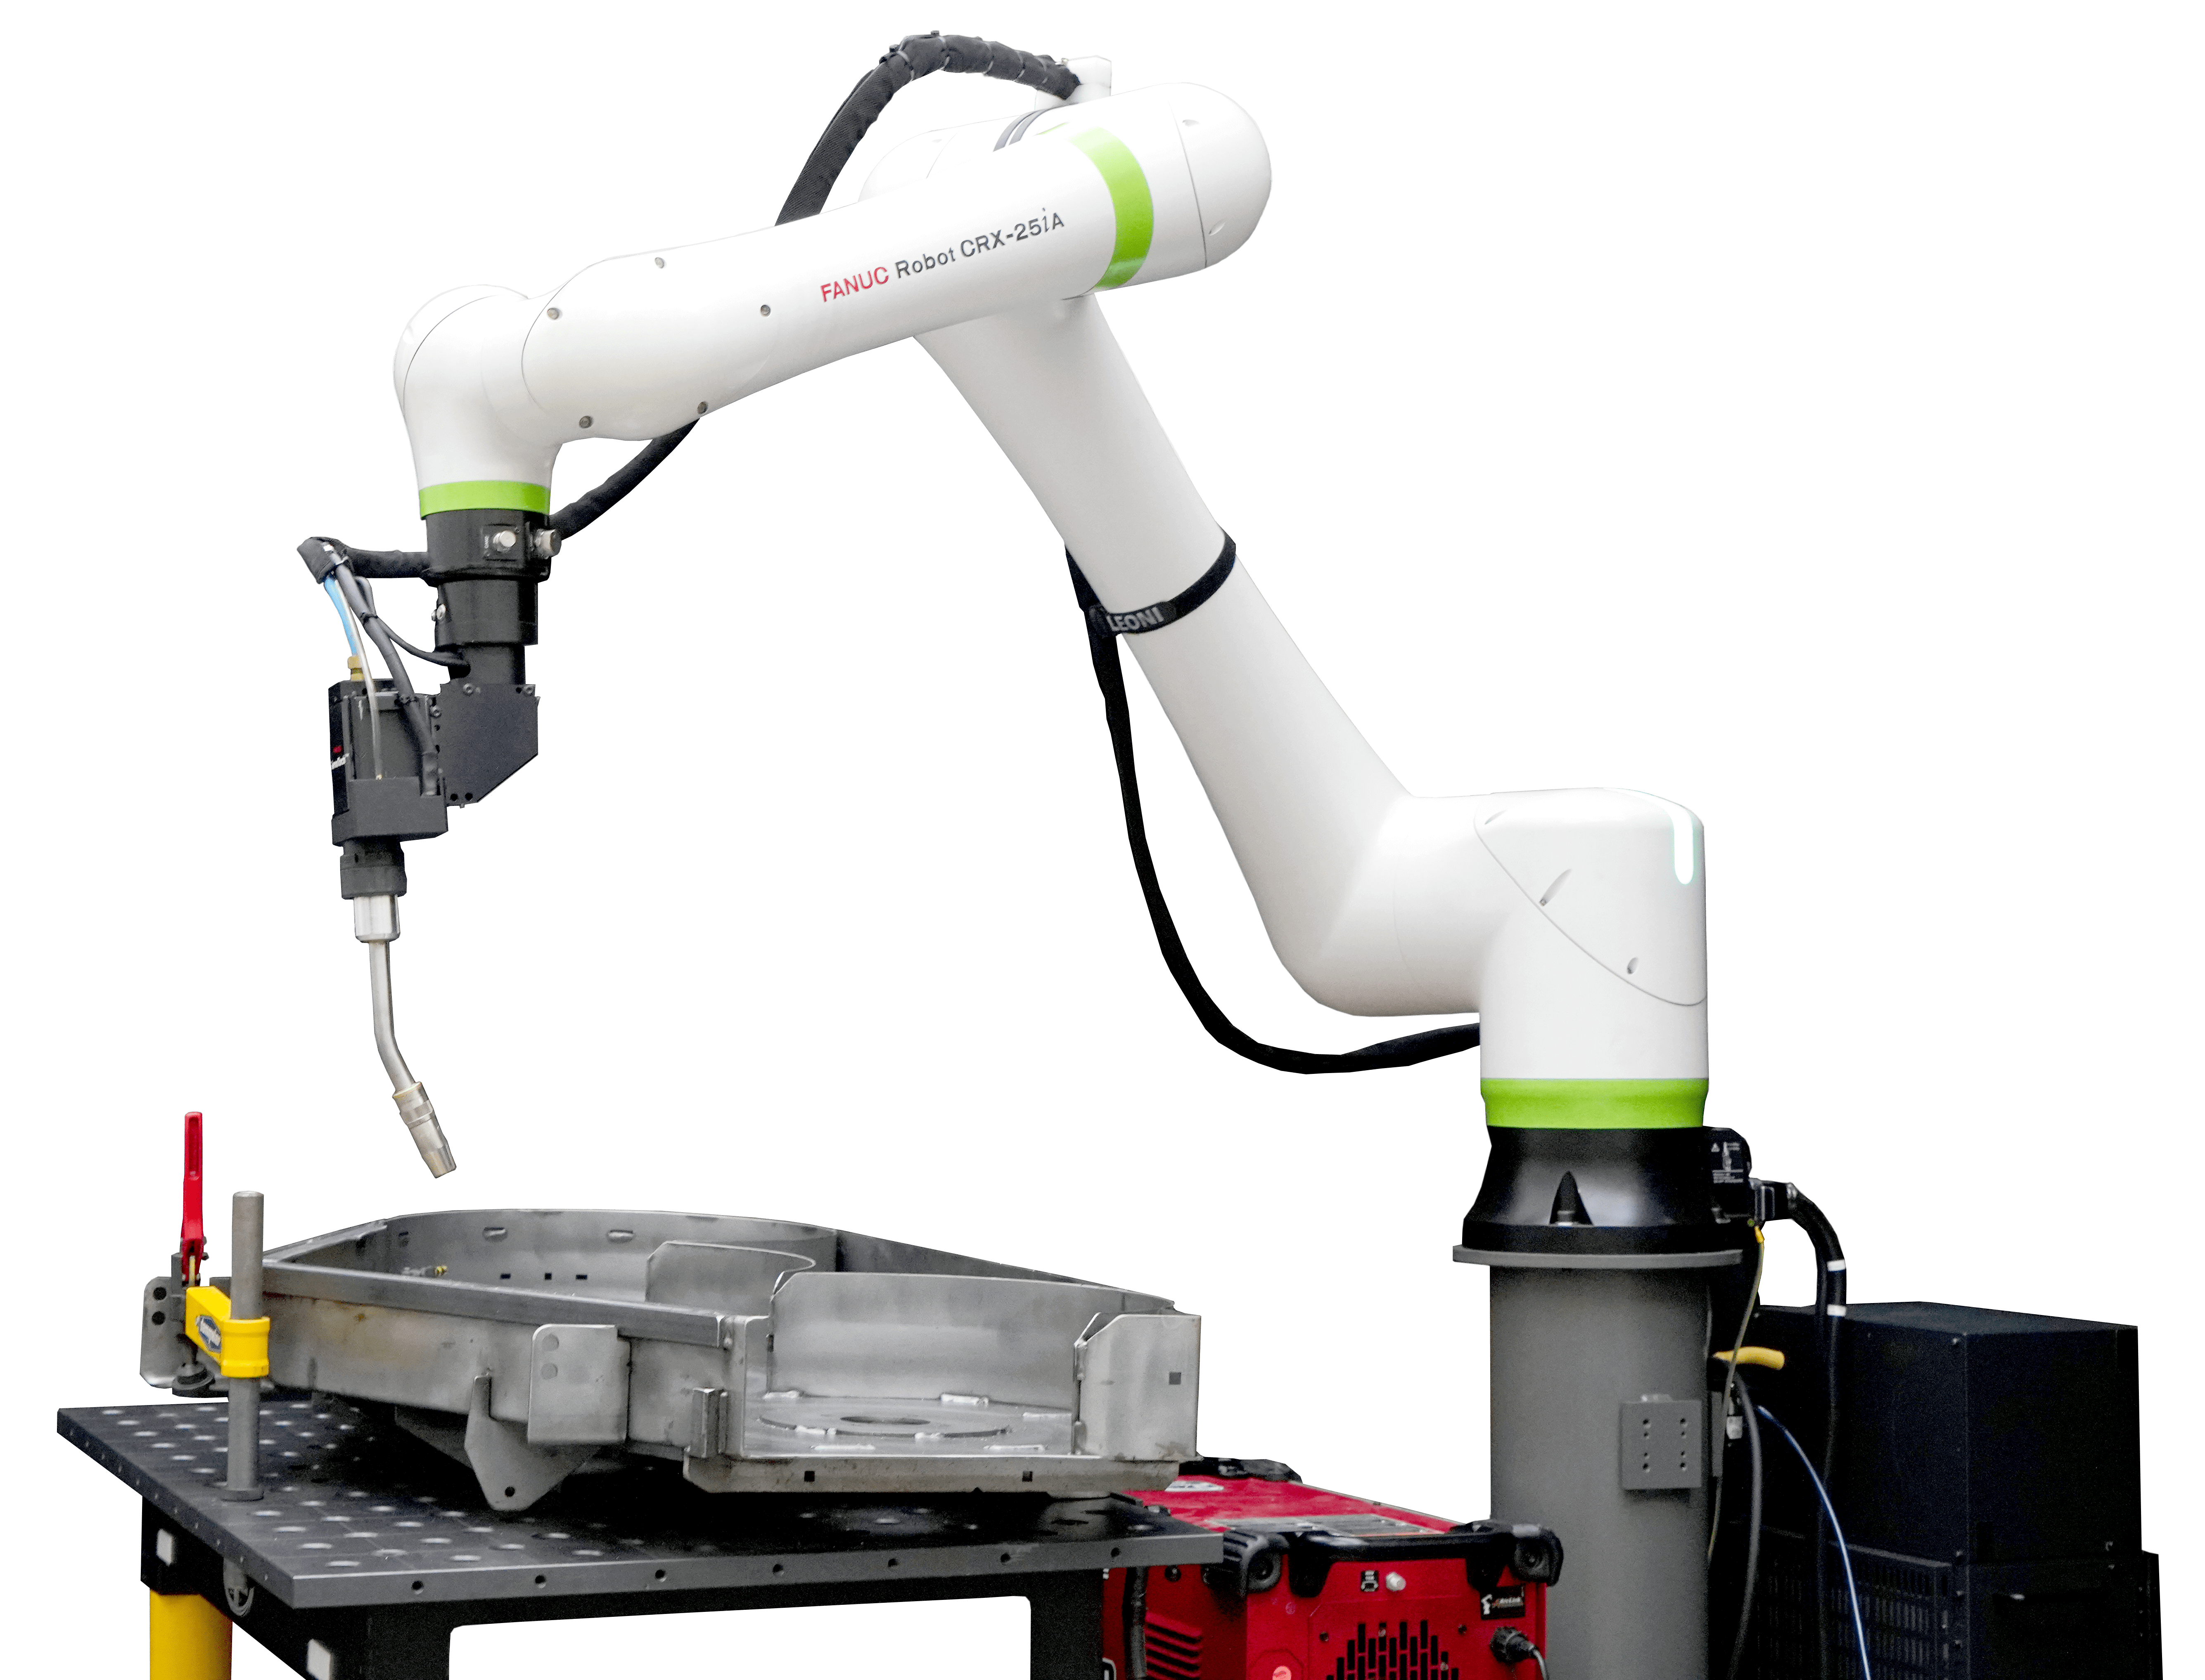 CRX-25iA Robot Welding